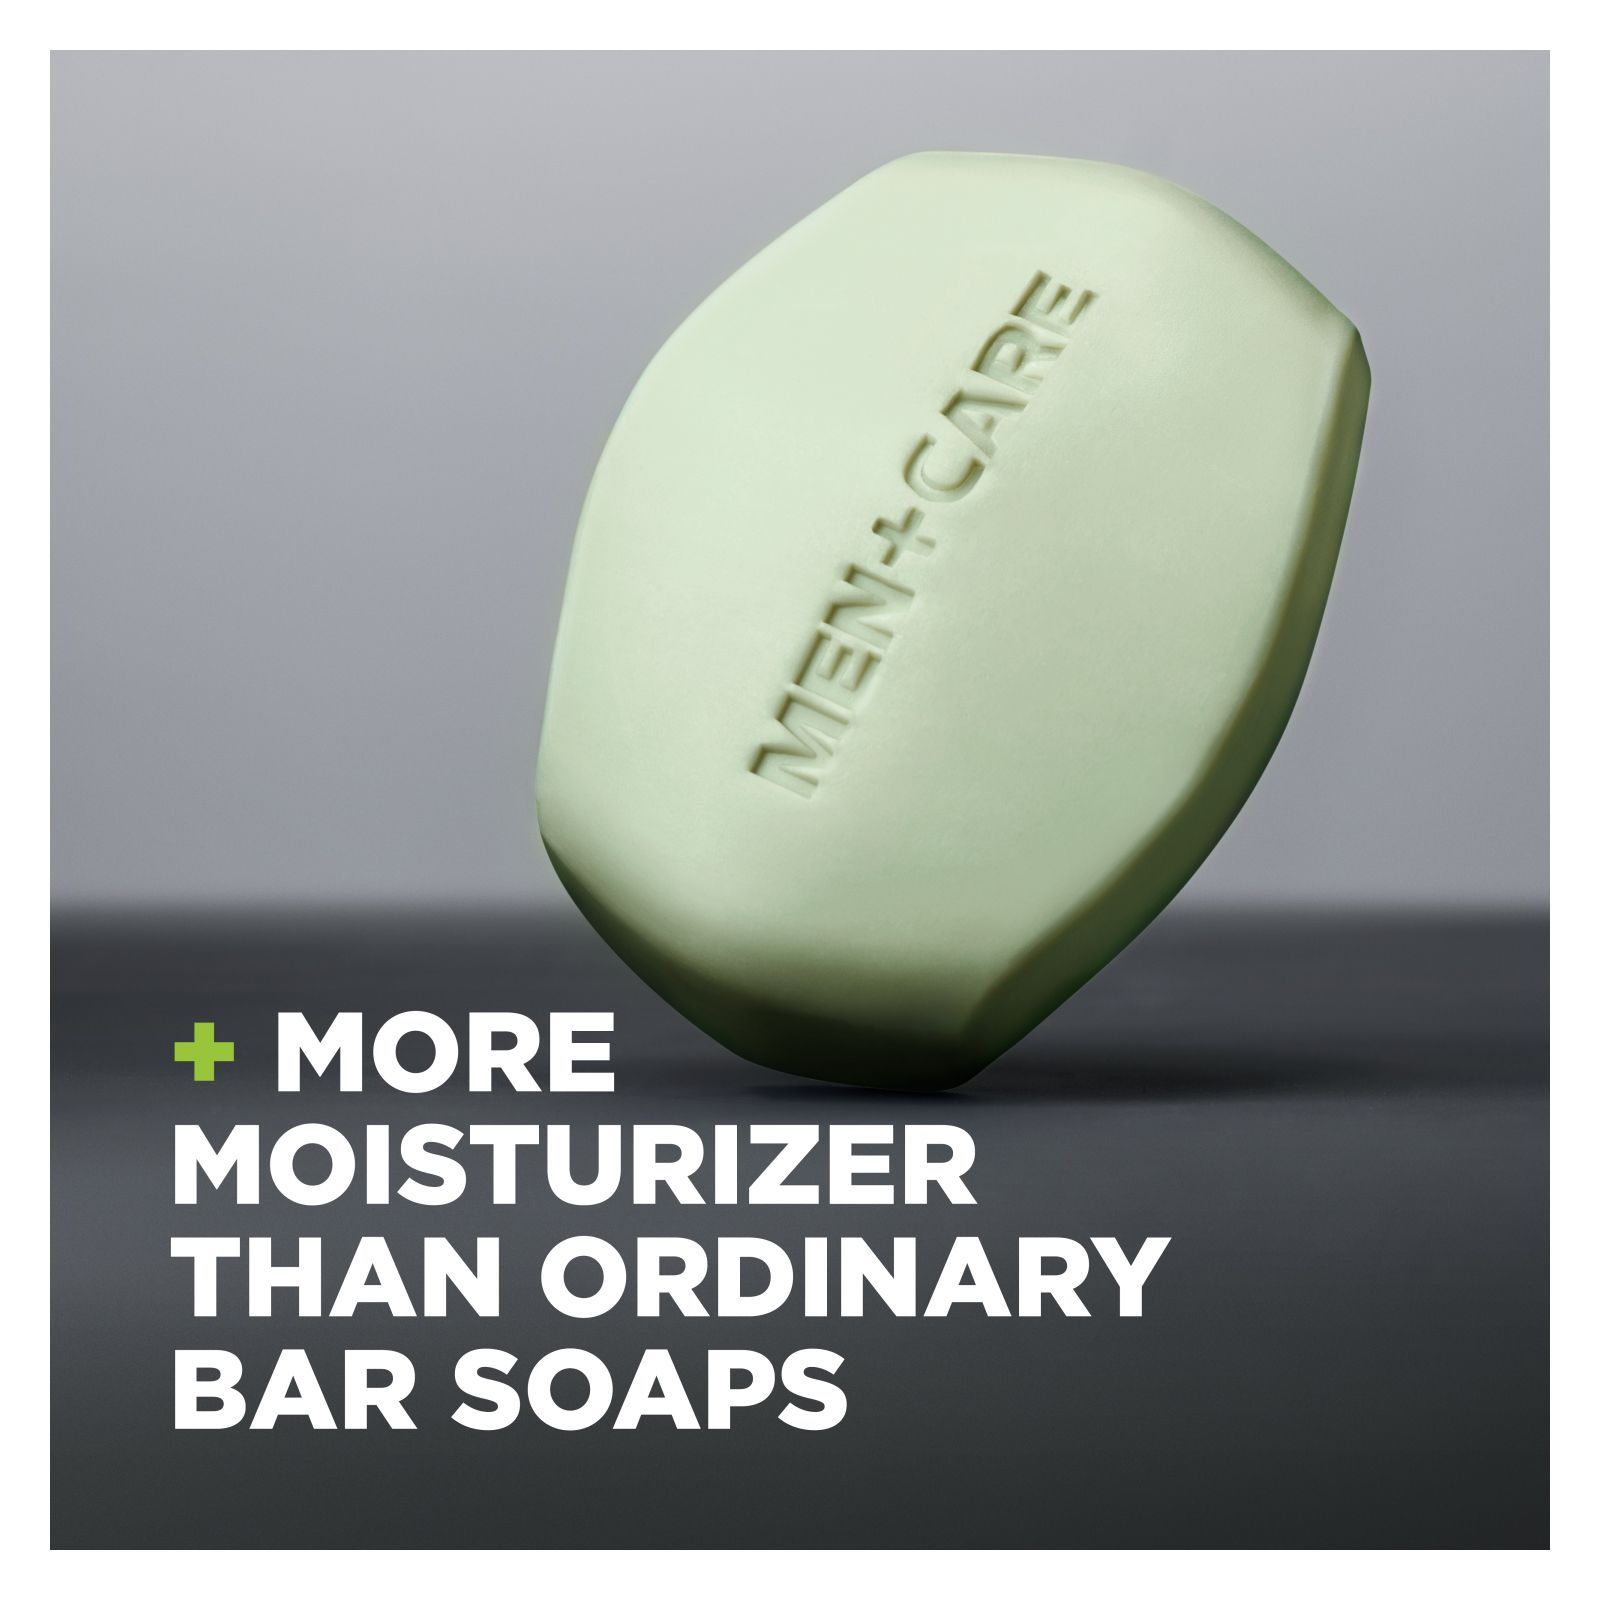 Dove Men+Care Body and Face Bar Soap, Extra Fresh (3.75 oz., 14 ct.) -  Sam's Club